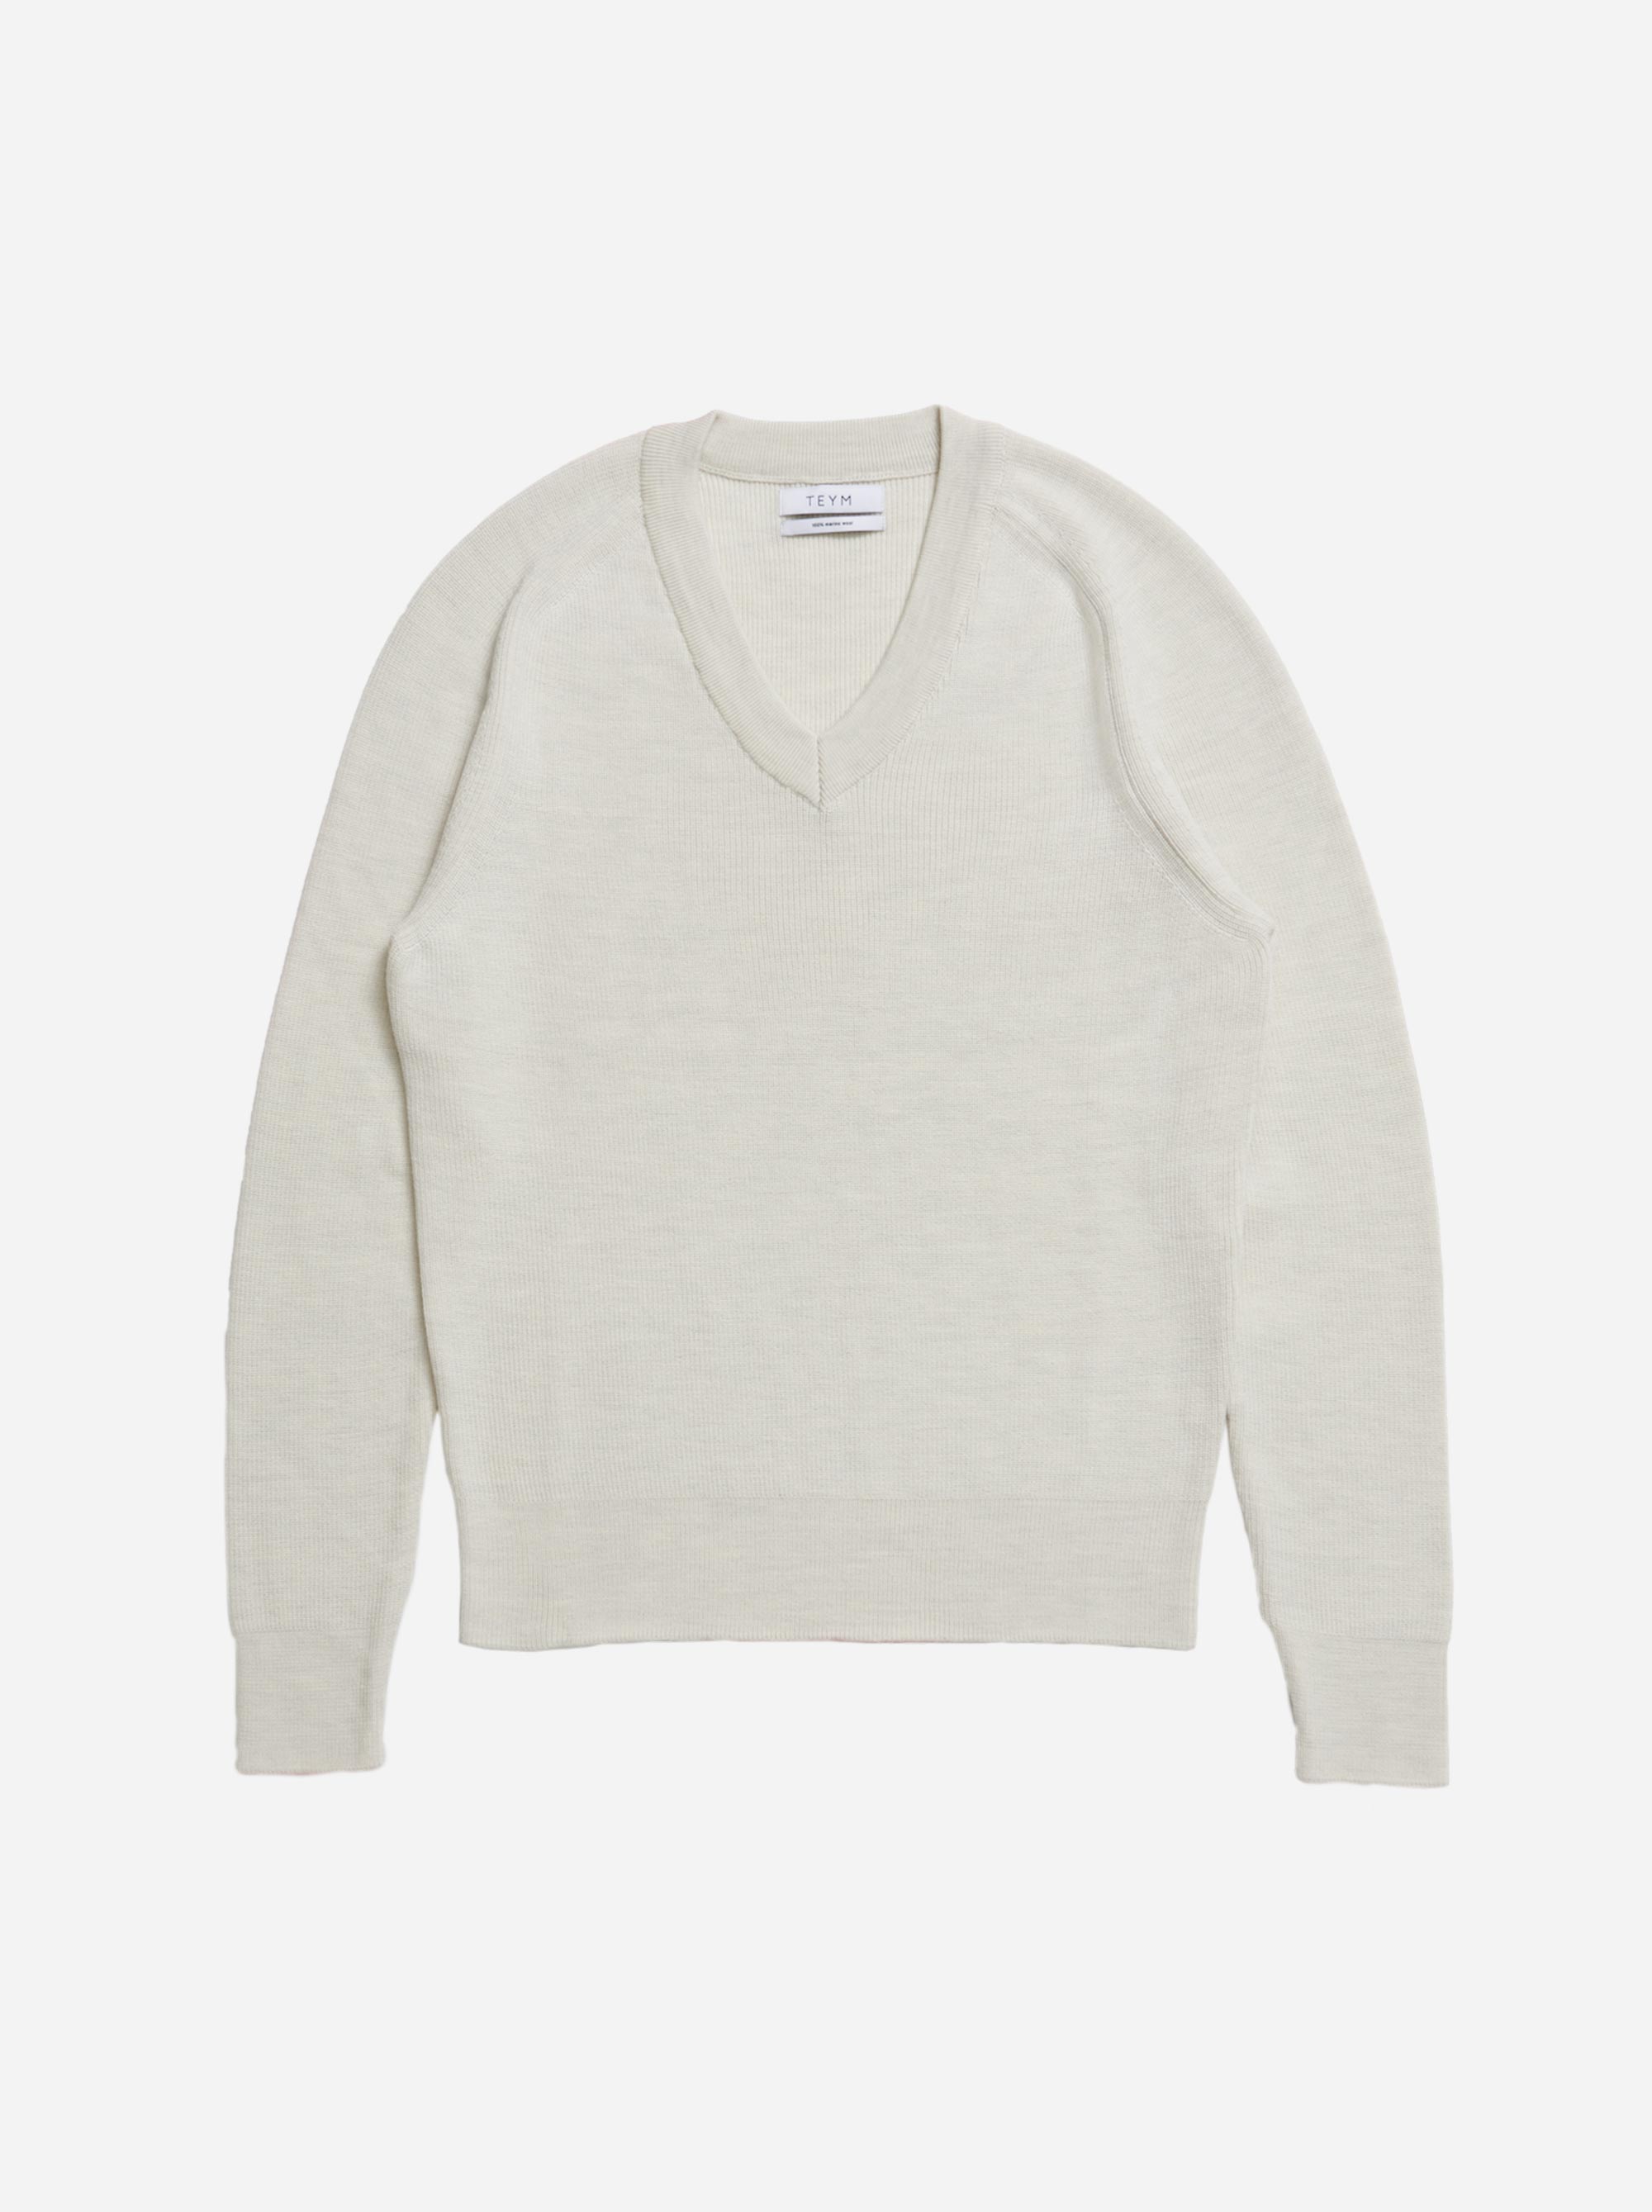 Teym - V-Neck - The Merino Sweater - Women - White - 4